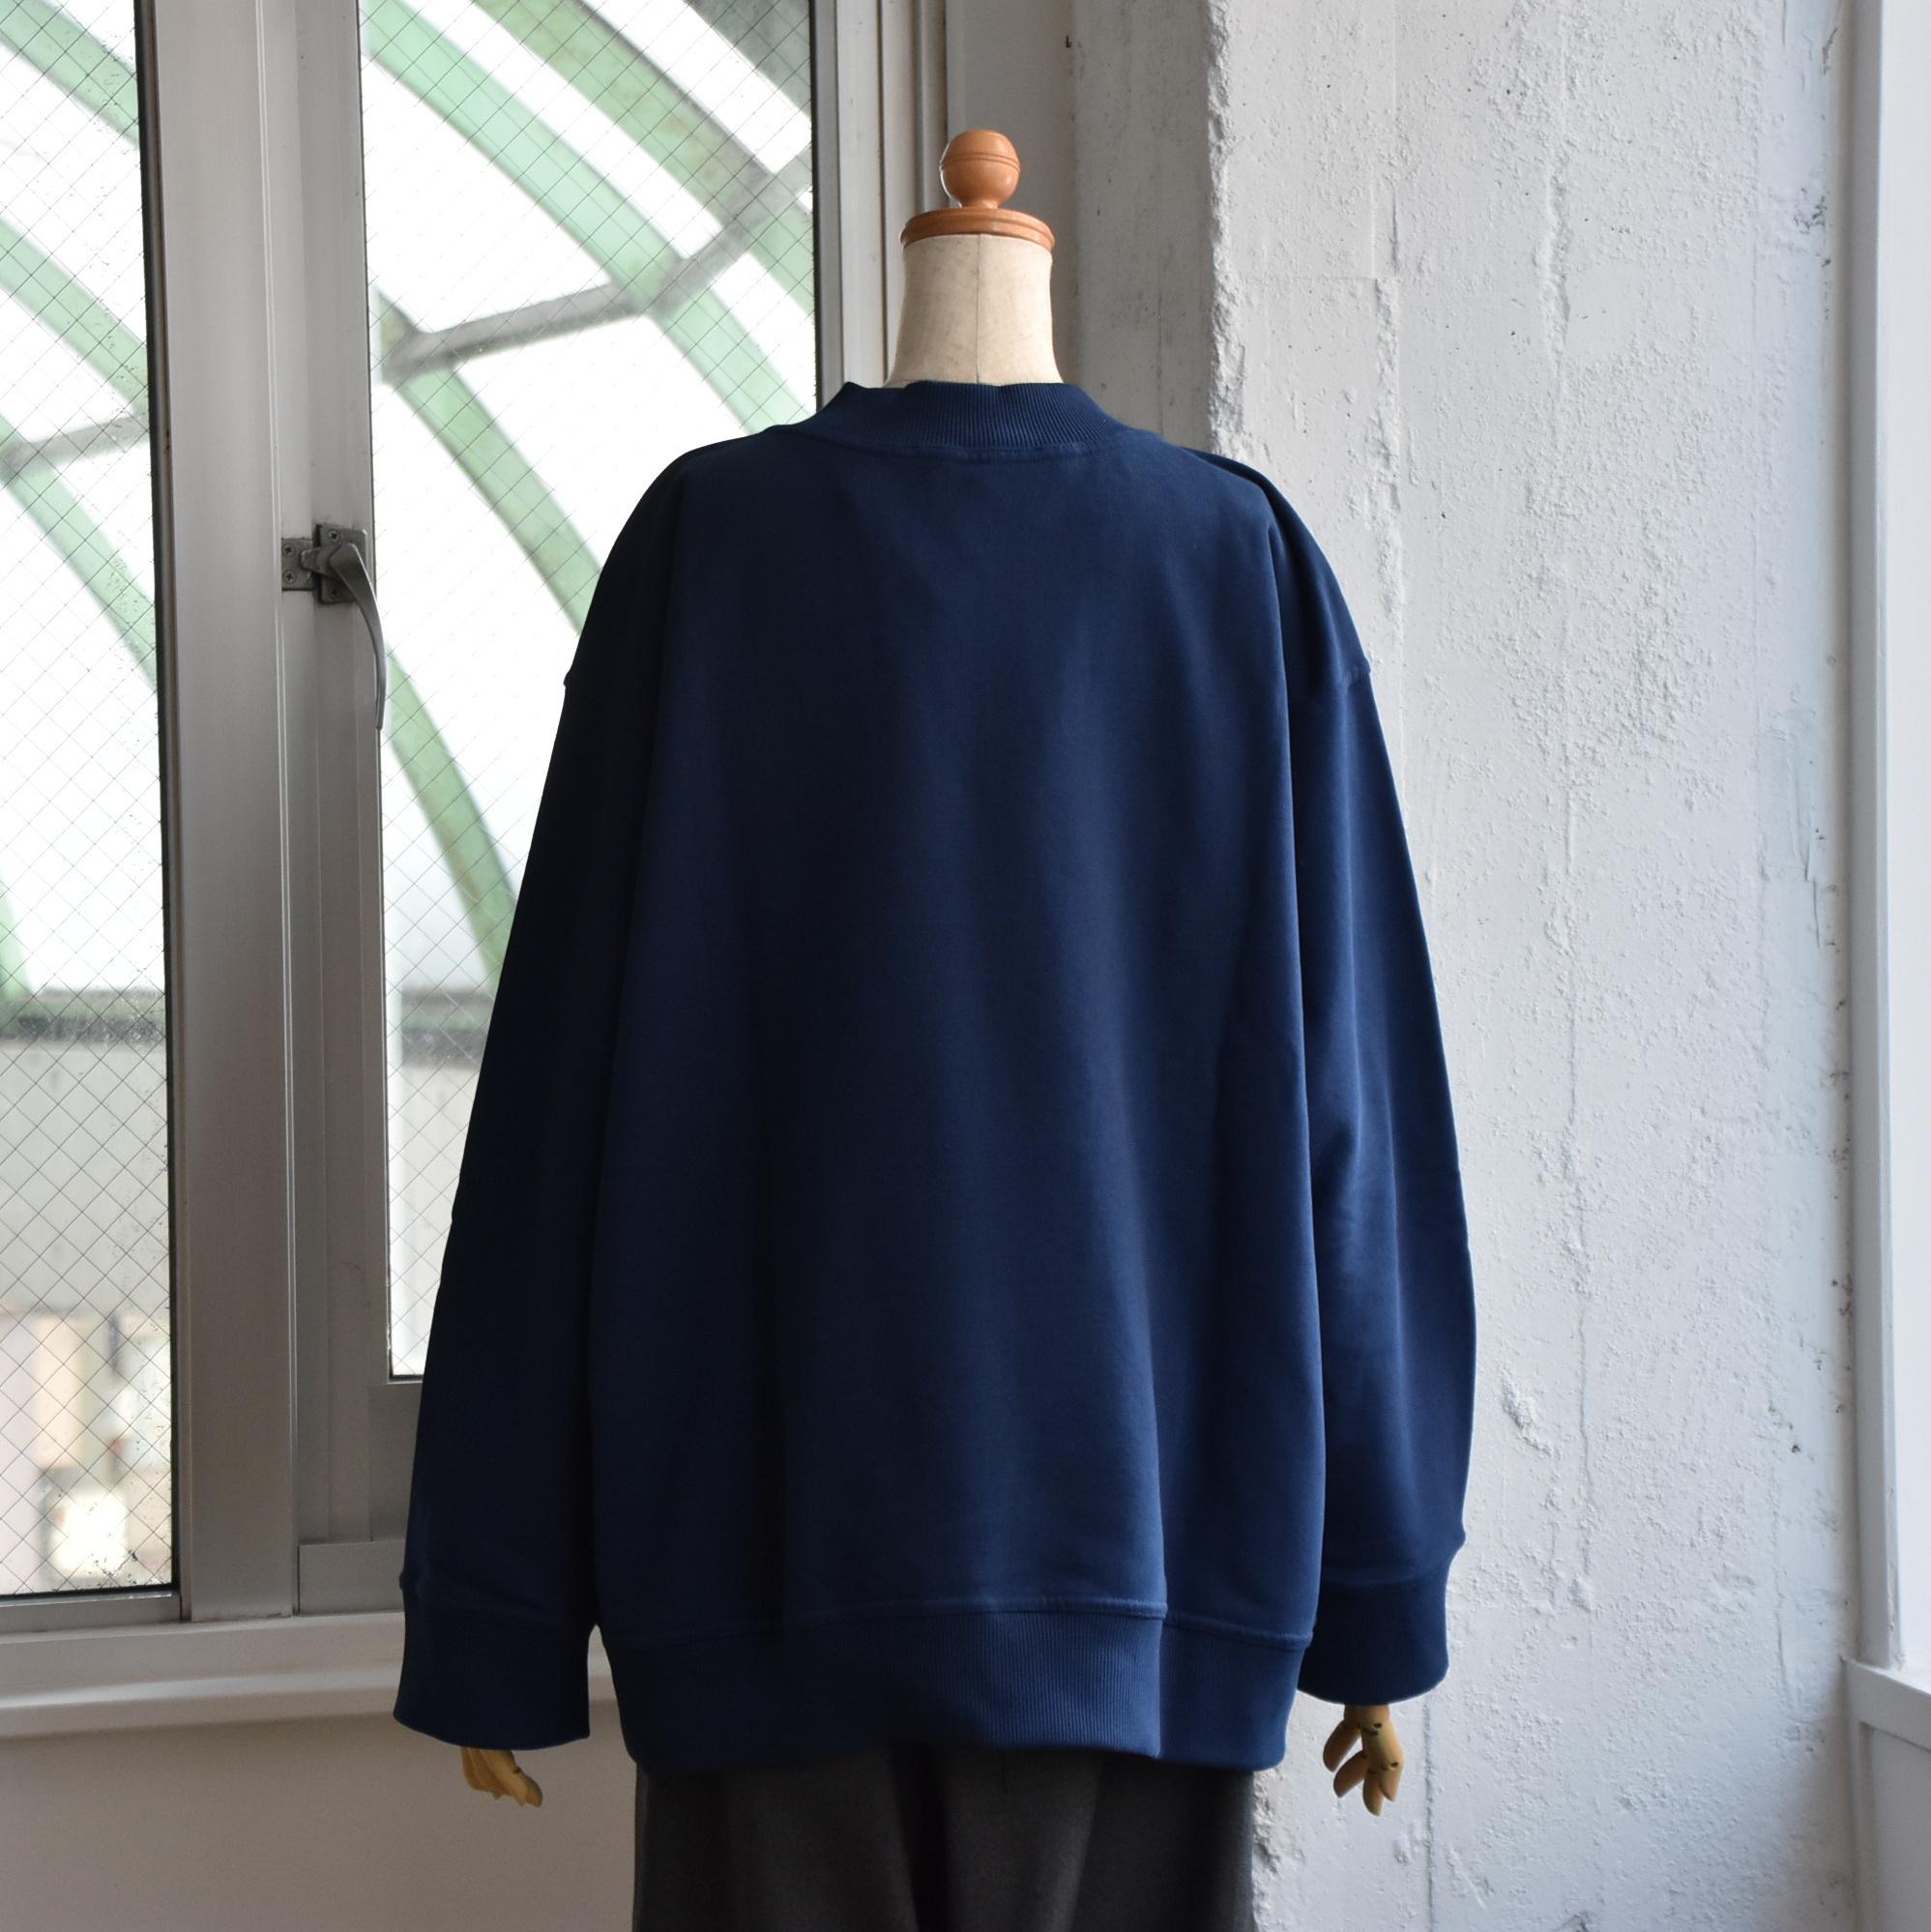 y40% off salezSOFIE D'HOORE(\tB[h[) / Long sleeve C-neck sweatshirt with top stichy2FWJz #TASTE-AA(7)